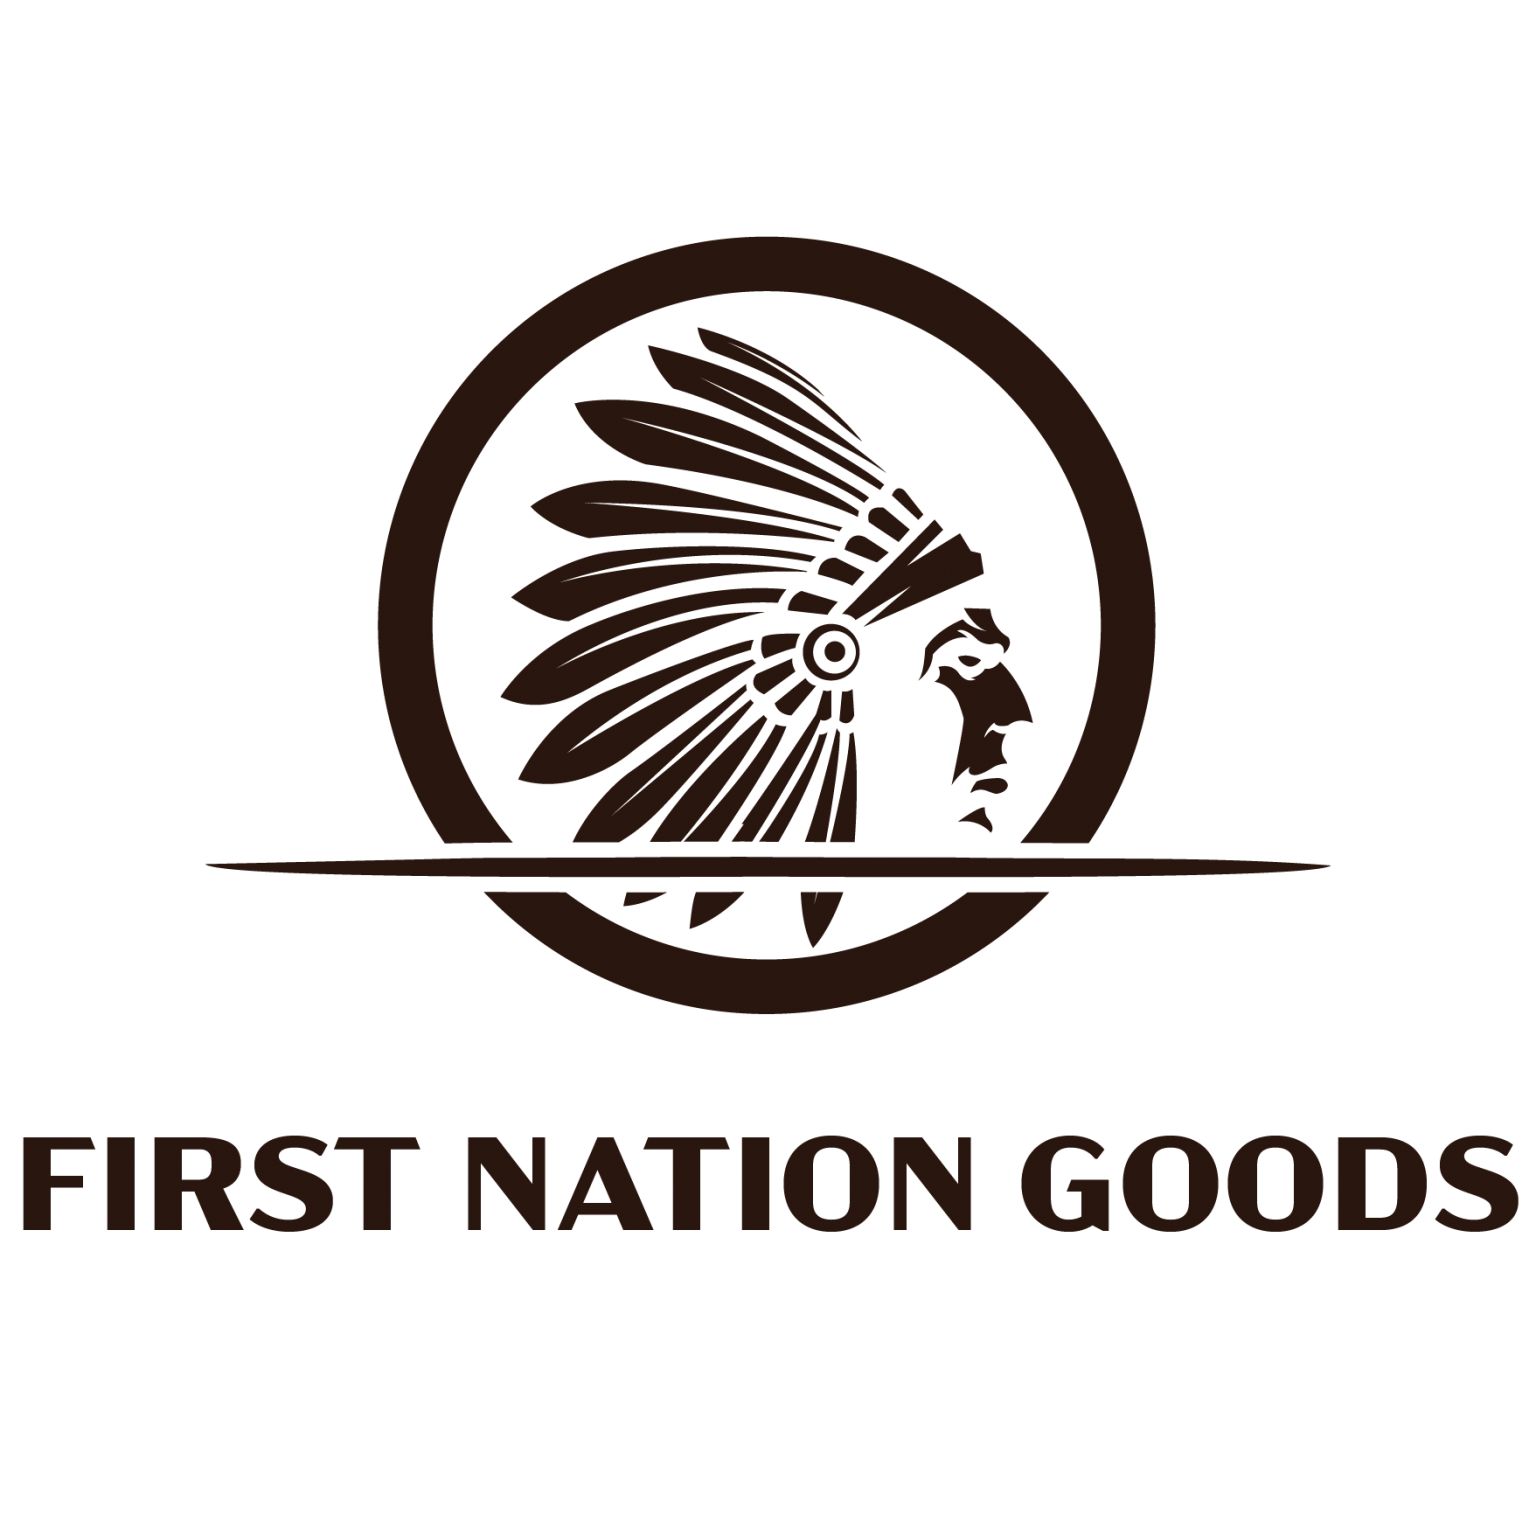 First nation goods